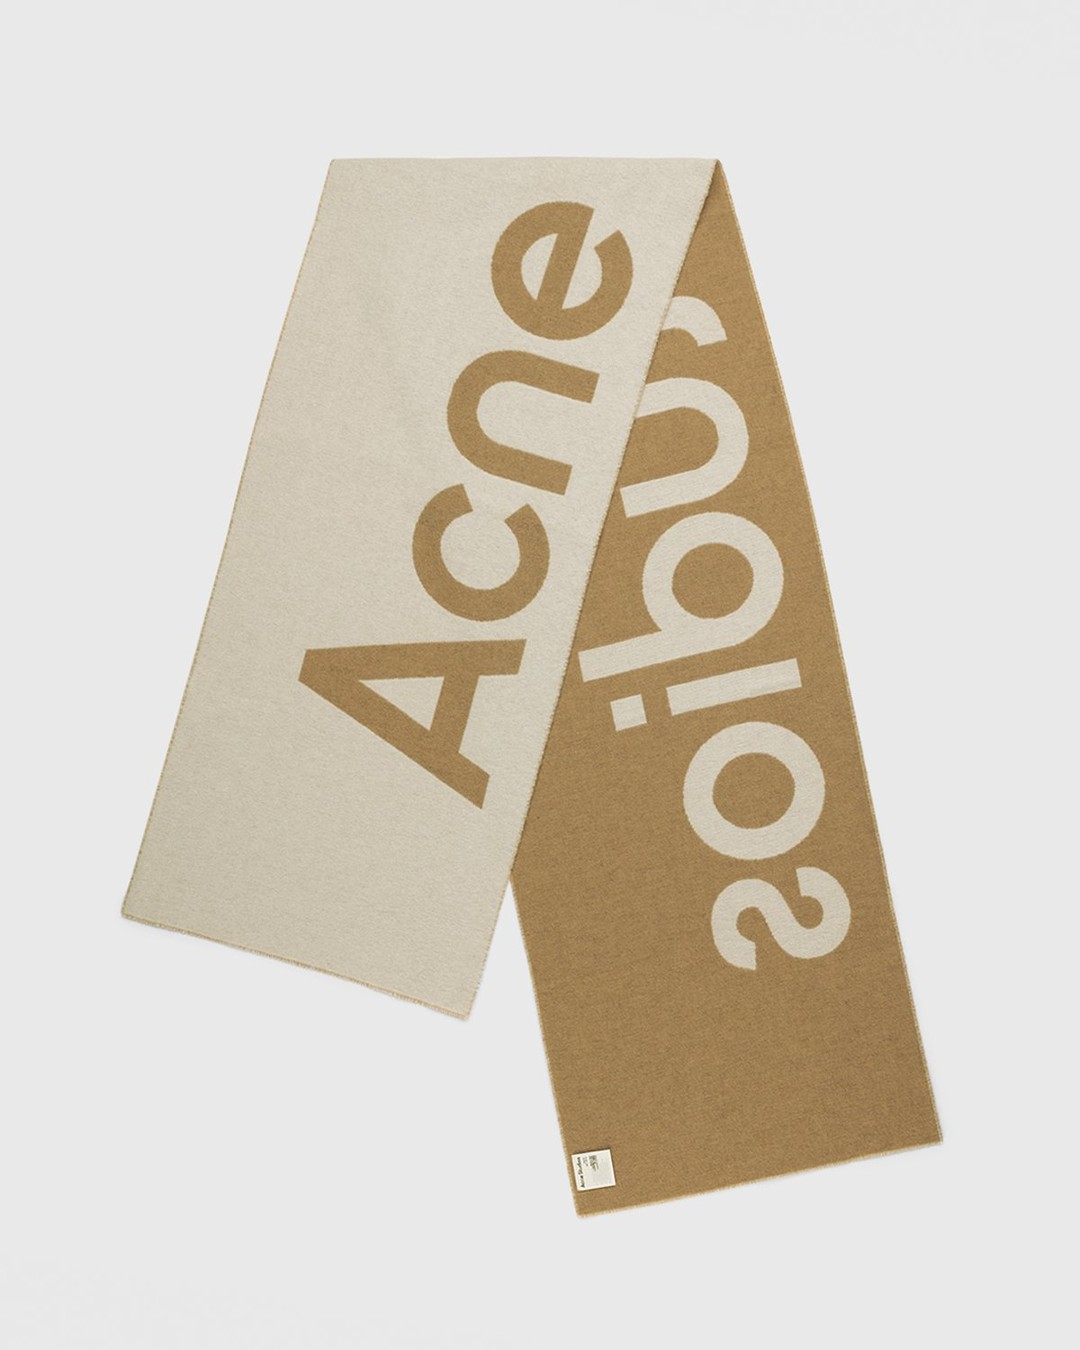 Acne Studios – Toronto Logo Scarf Brown - Scarves - Brown - Image 1